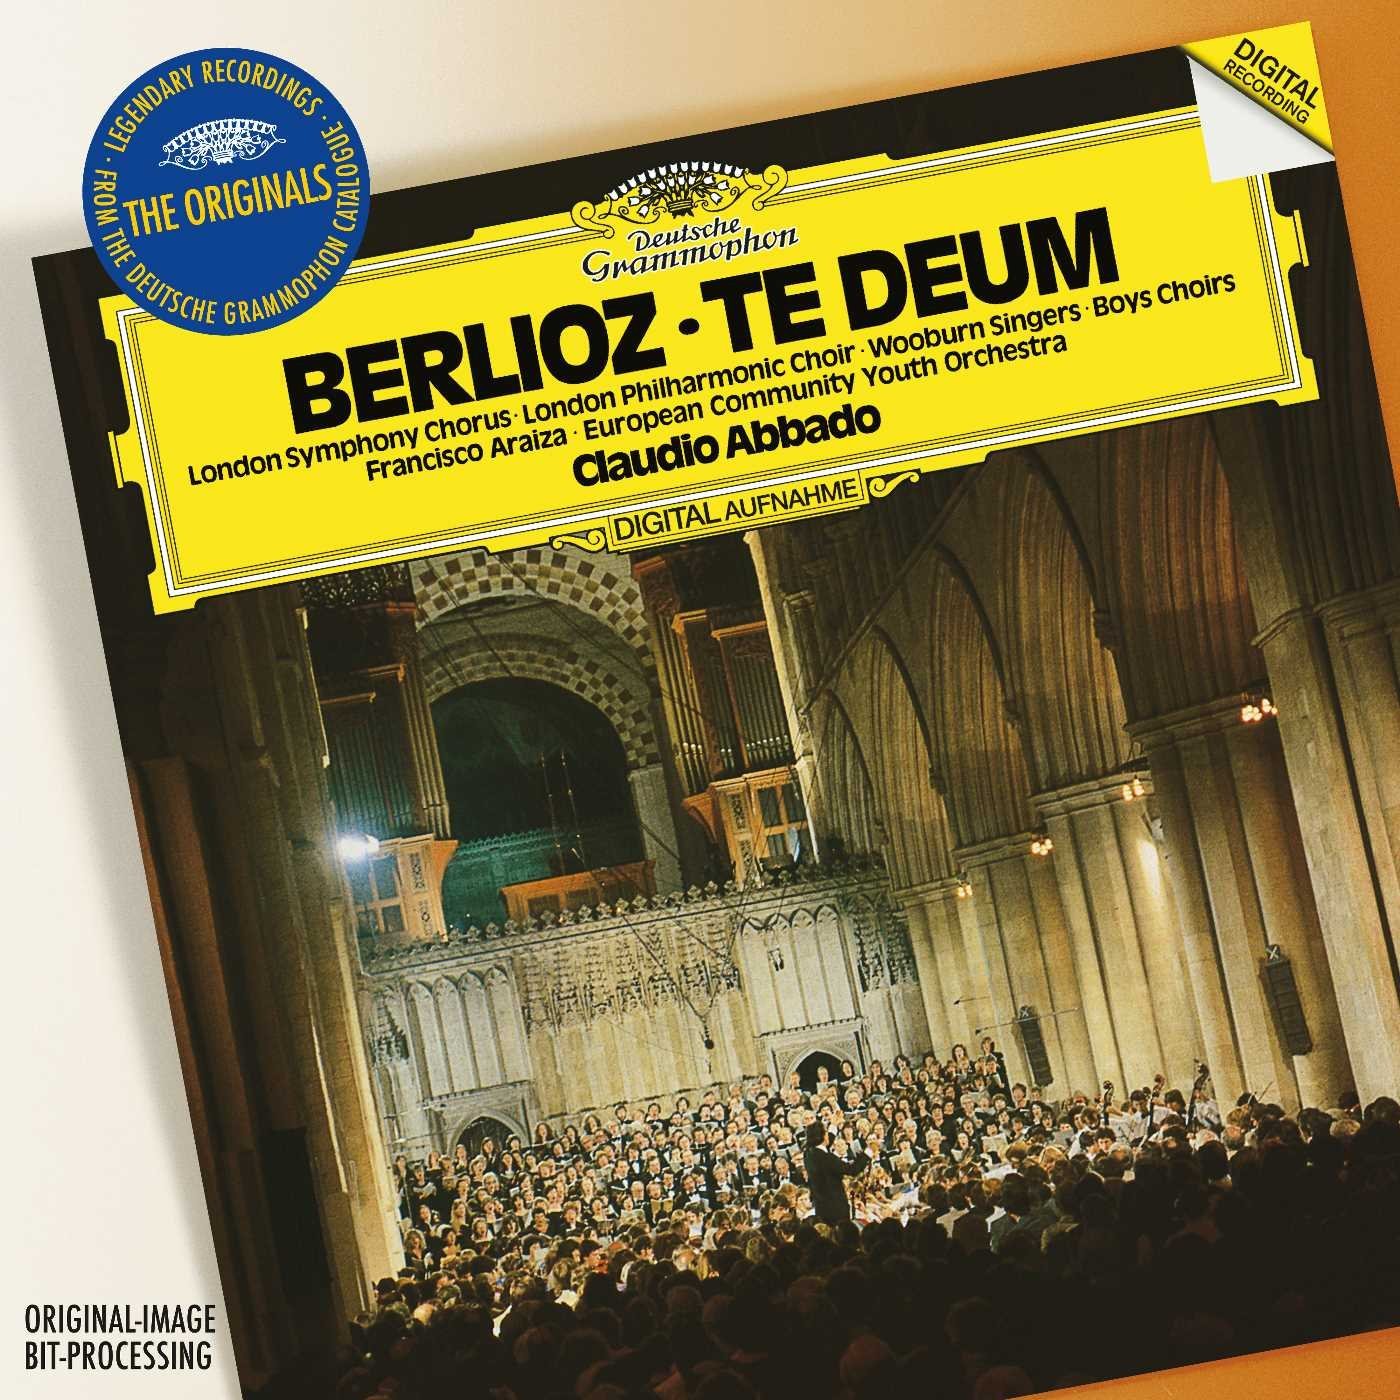 Berlioz: Te Deum, Op.22 | Martin Haselbock, London Symphony Chorus, Claudio Abbado, European Community Youth Orchestra, Wooburn Singers, London Philharmonic Choir